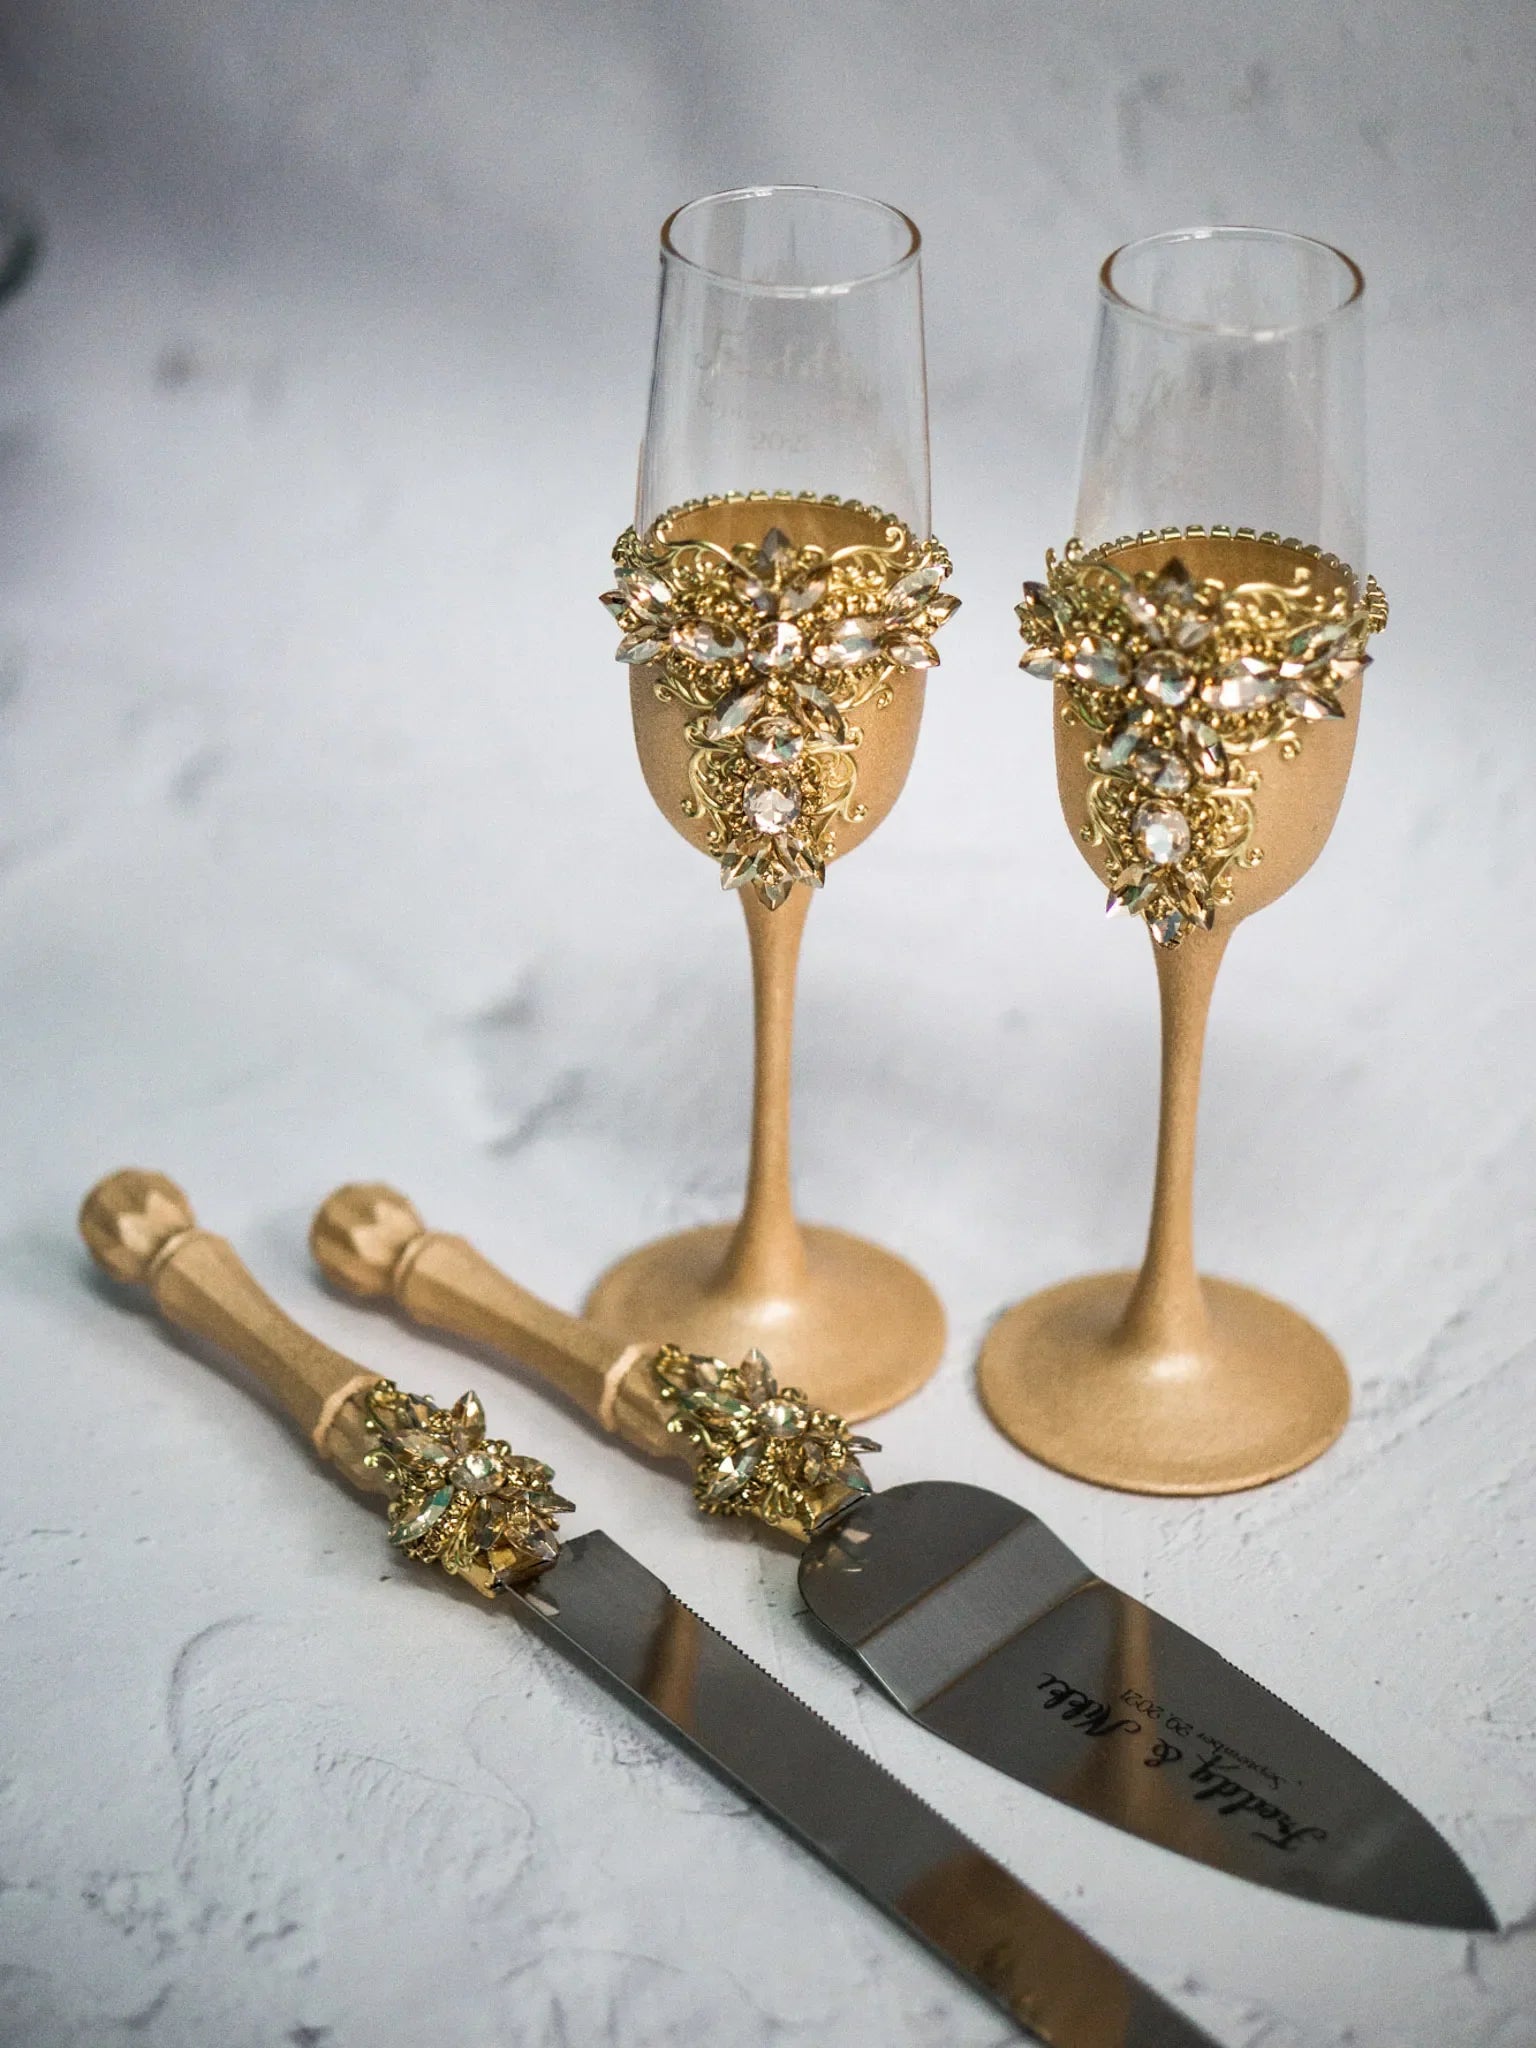 Gold-colored filigree wedding accessories